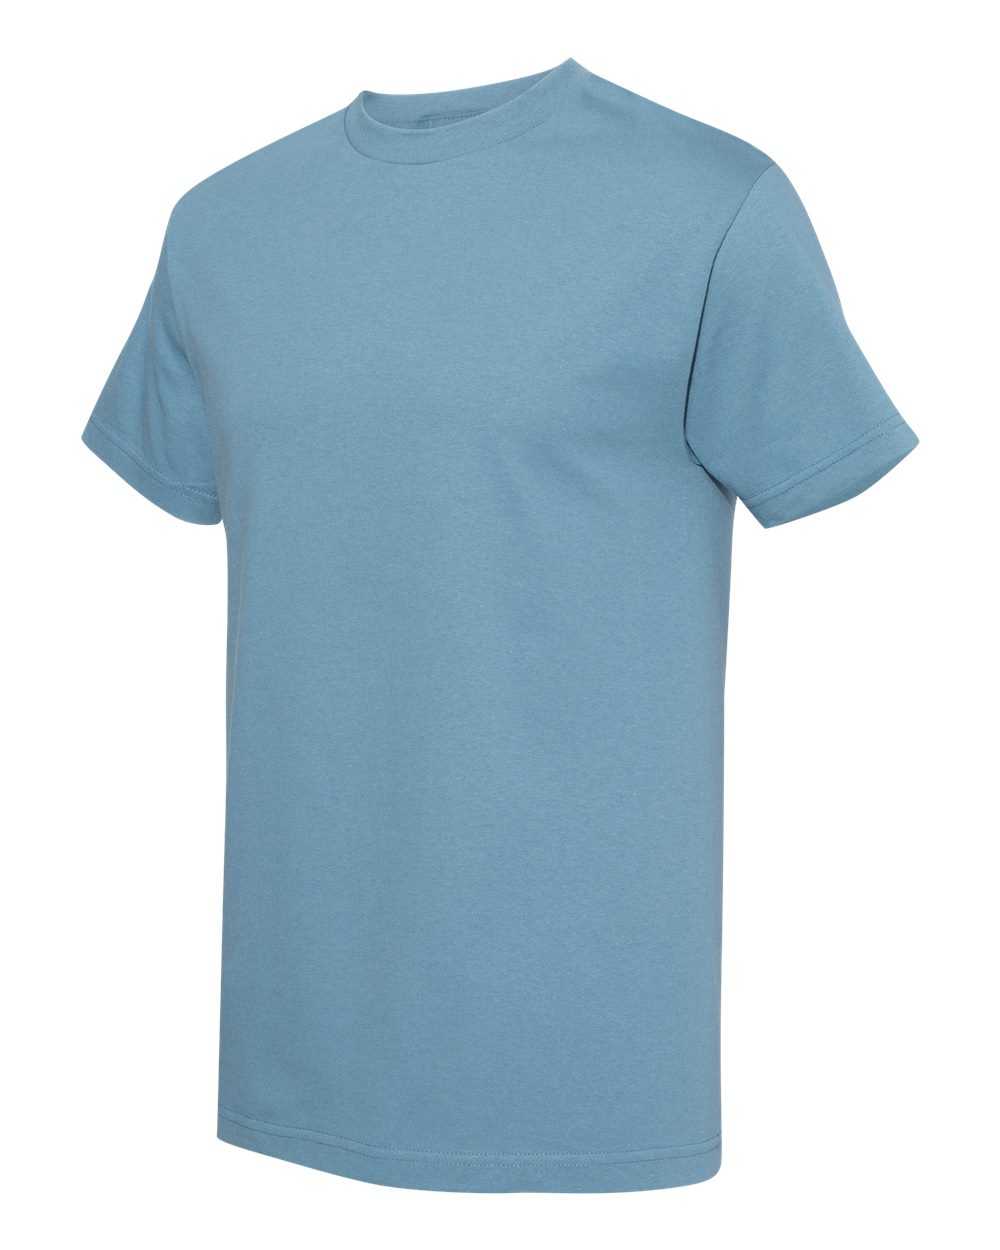 American Apparel 1301 Unisex Heavyweight Cotton T-Shirt - Slate - HIT a Double